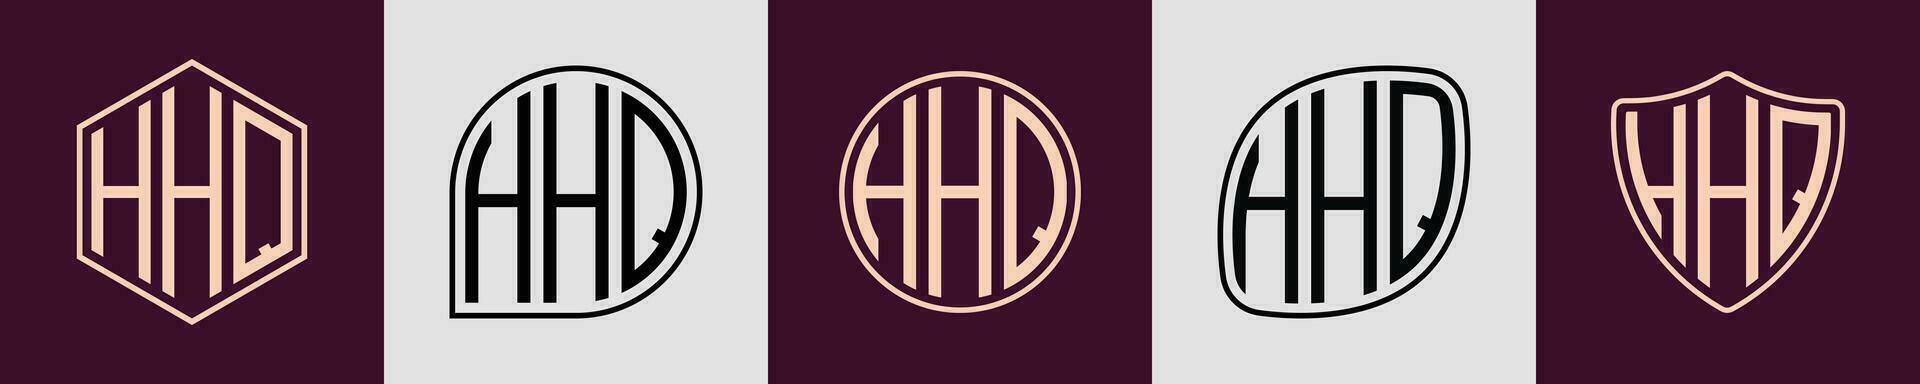 criativo simples inicial monograma hhq logotipo projetos. vetor